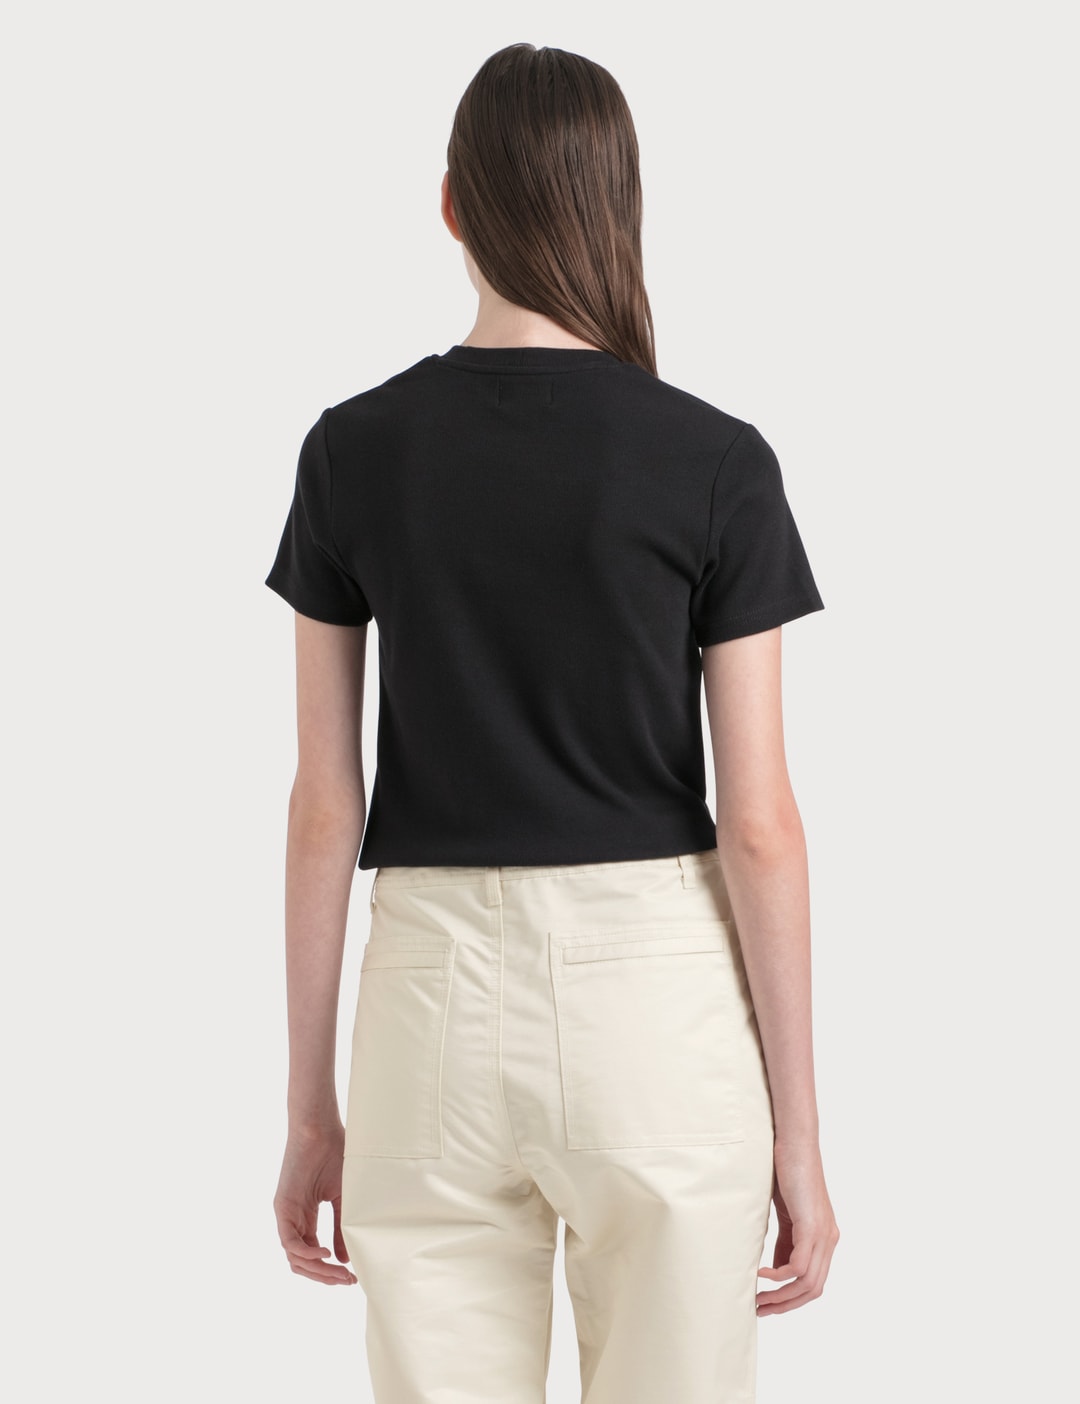 Stüssy - Classic Rib T-Shirt | HBX - Globally Curated Fashion and ...